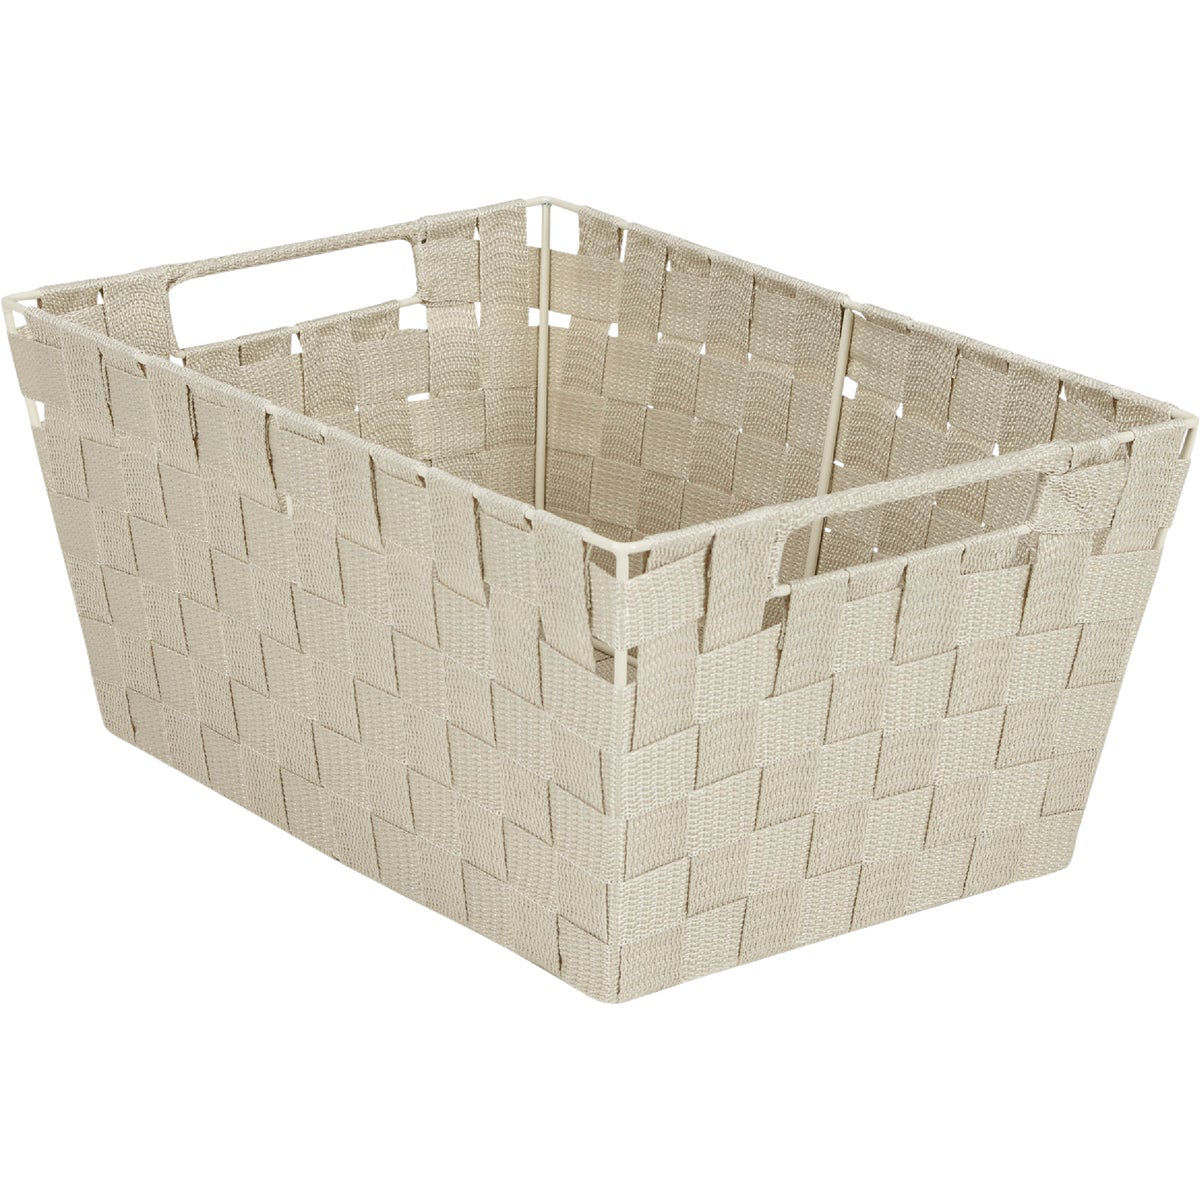 Storage Baskets: Best Baskets to Organize Your Home